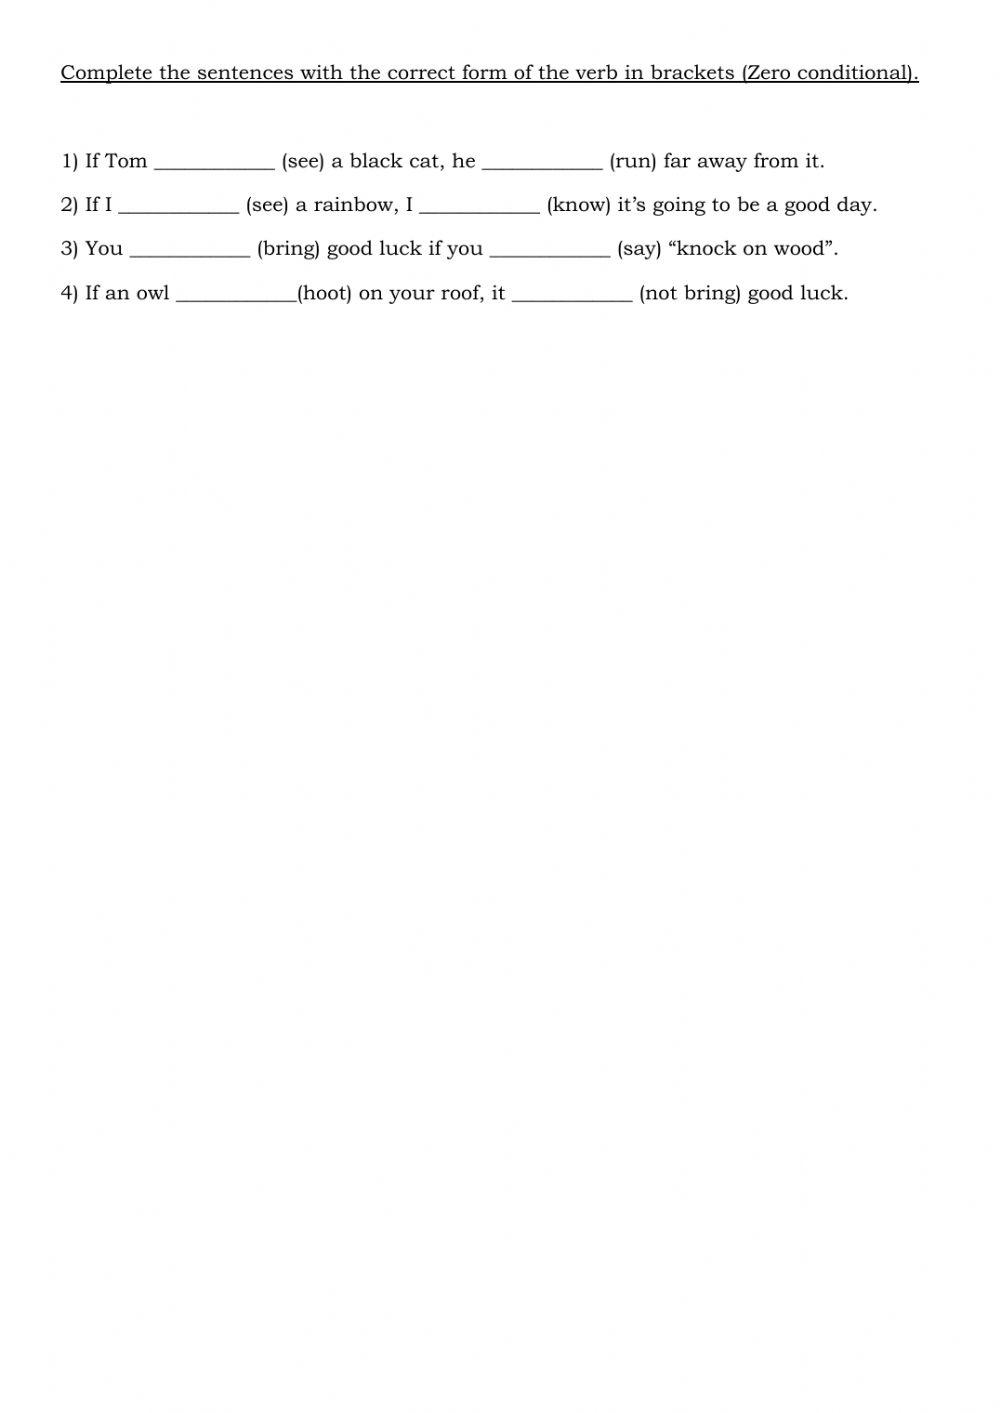 Complete the sentences (Zero conditional)